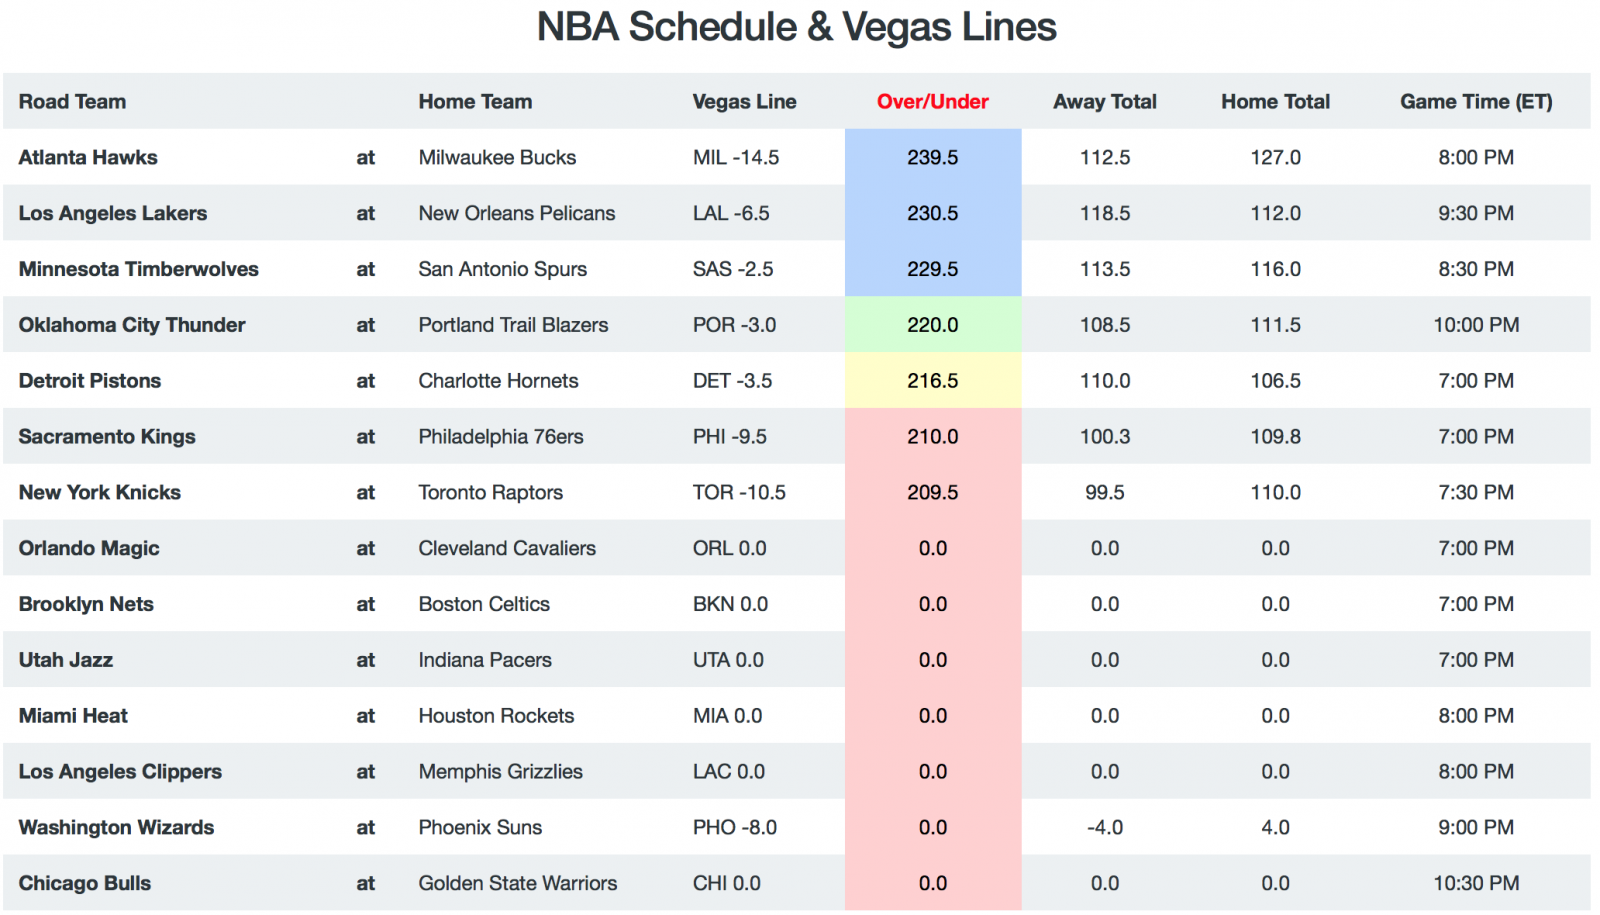 NBA Game Breakdown - Totals